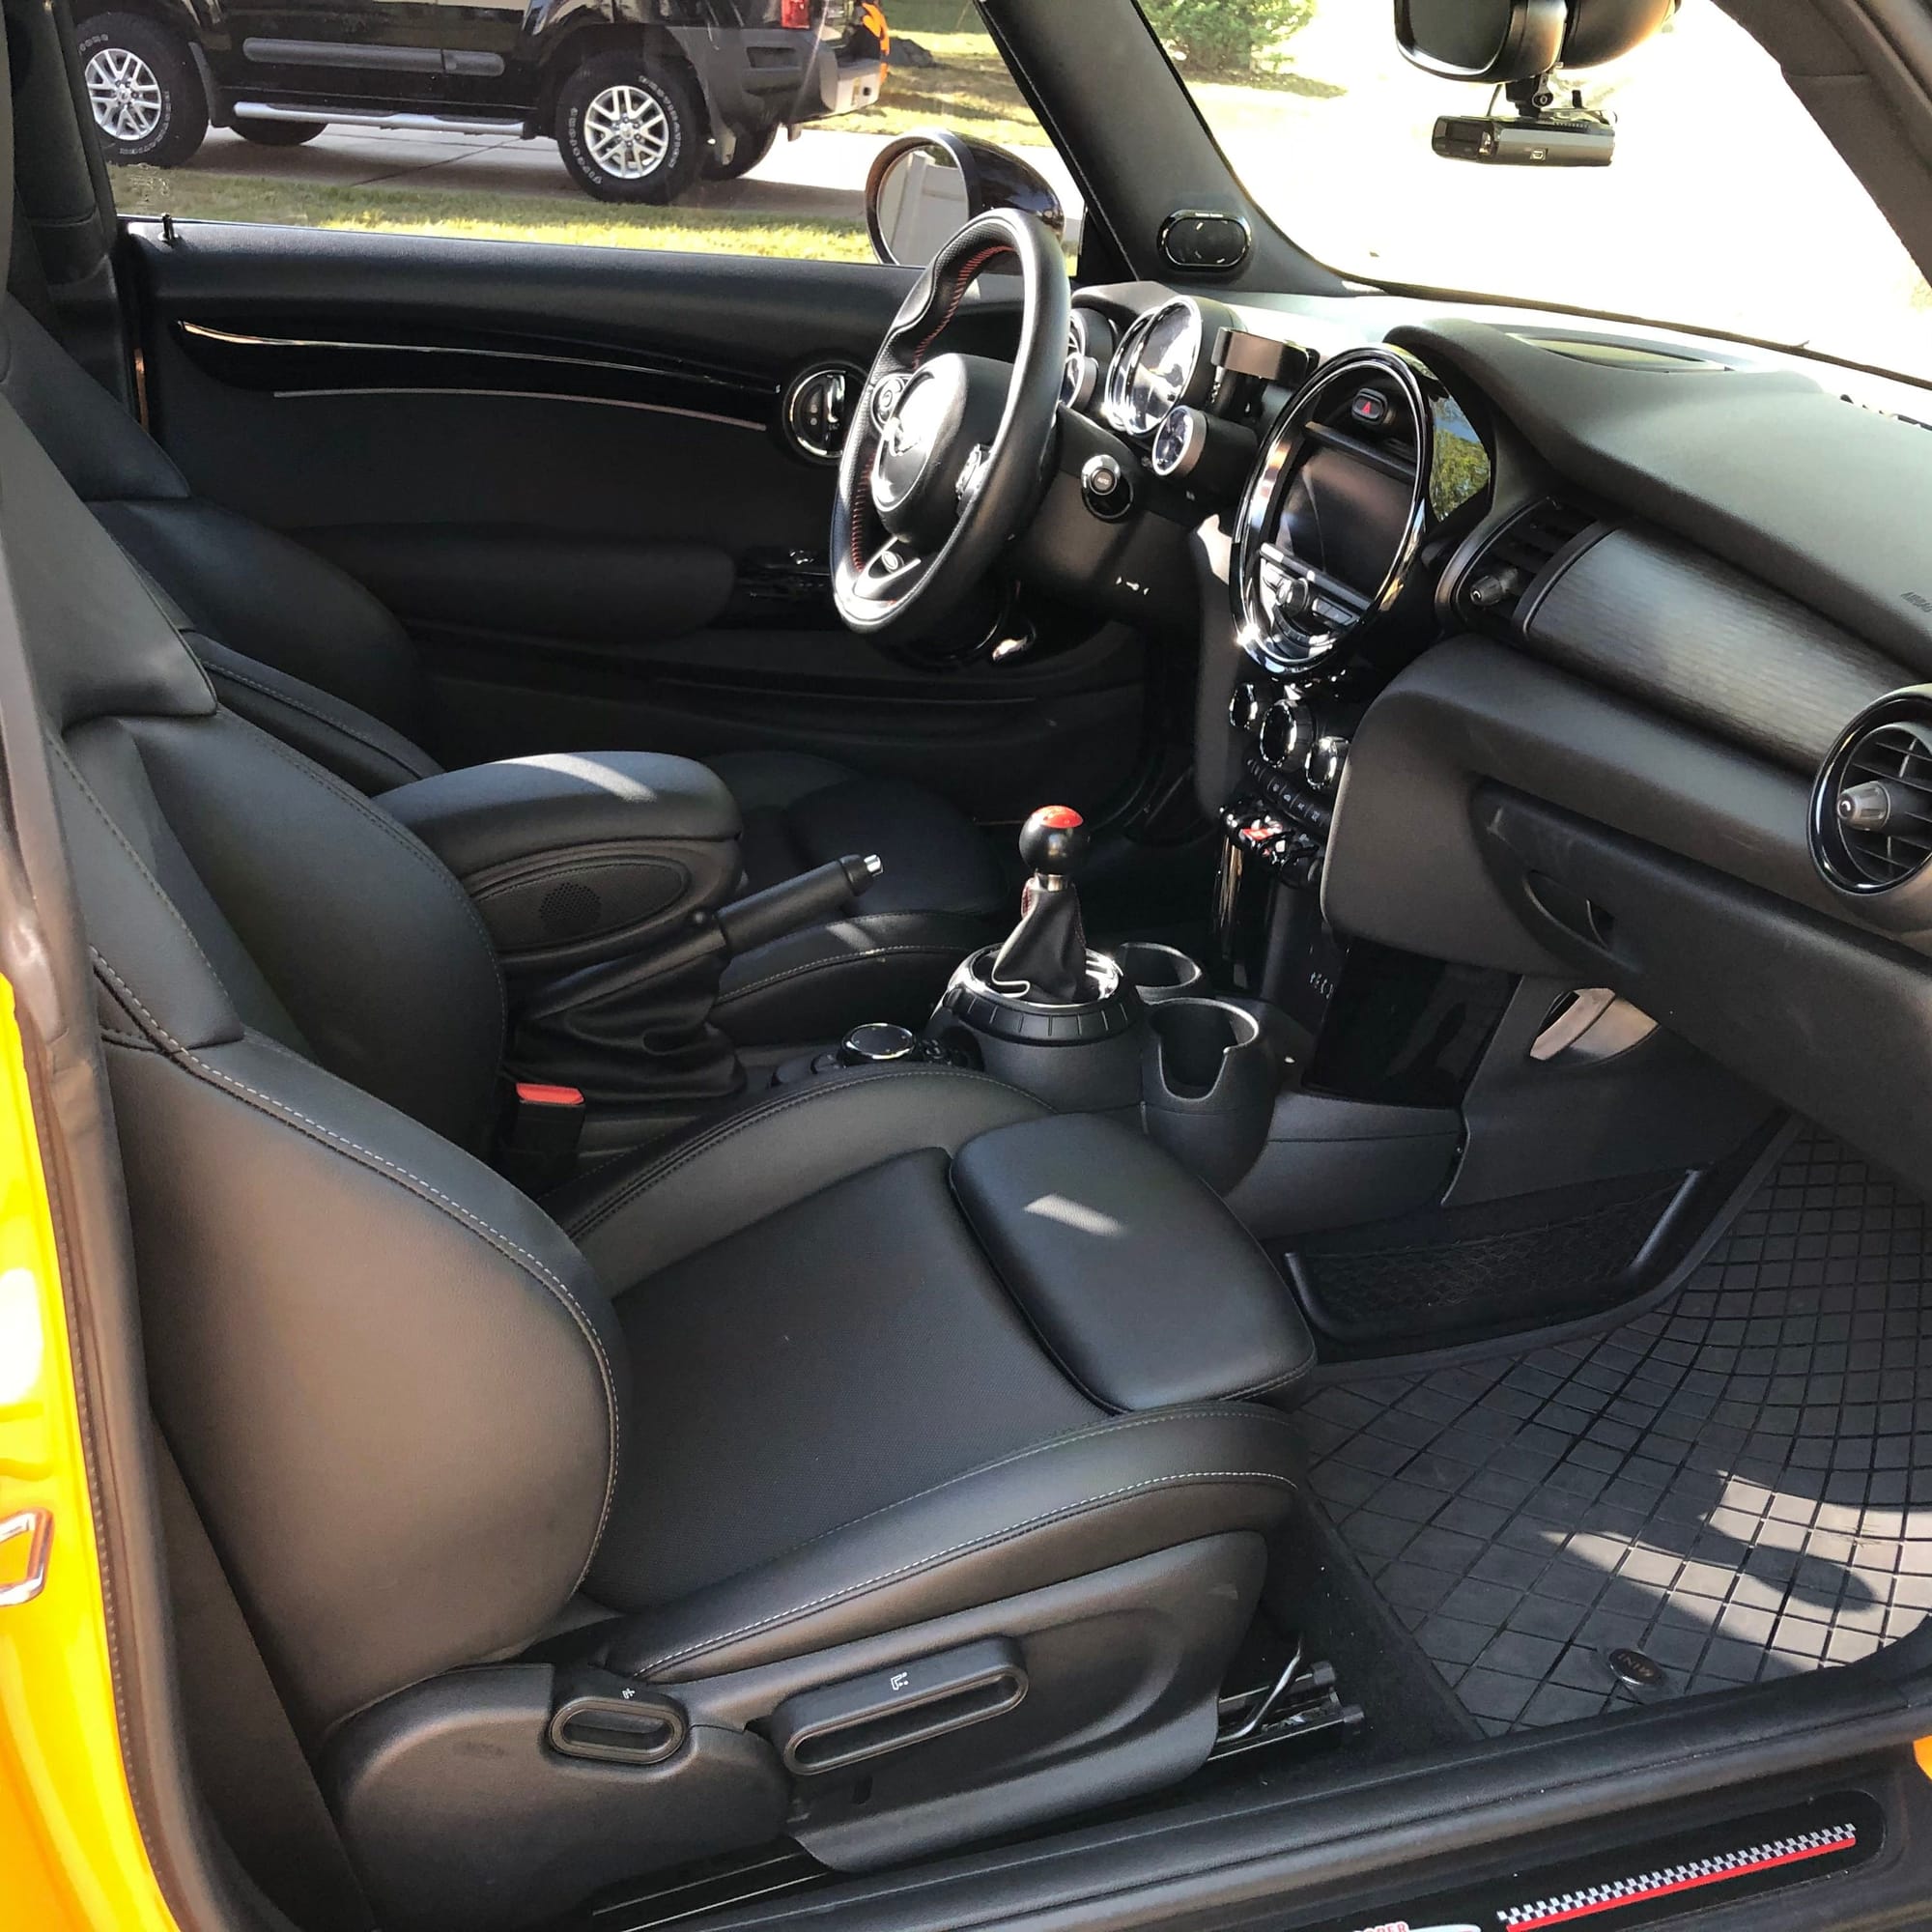 2017 Mini Cooper - Fully Loaded 2017 Mini Cooper S 6-Speed + Mods - Used - VIN WMWXP7C33H3C61951 - 37,000 Miles - 4 cyl - 2WD - Manual - Hatchback - Orange - Marlton, NJ 08053, United States